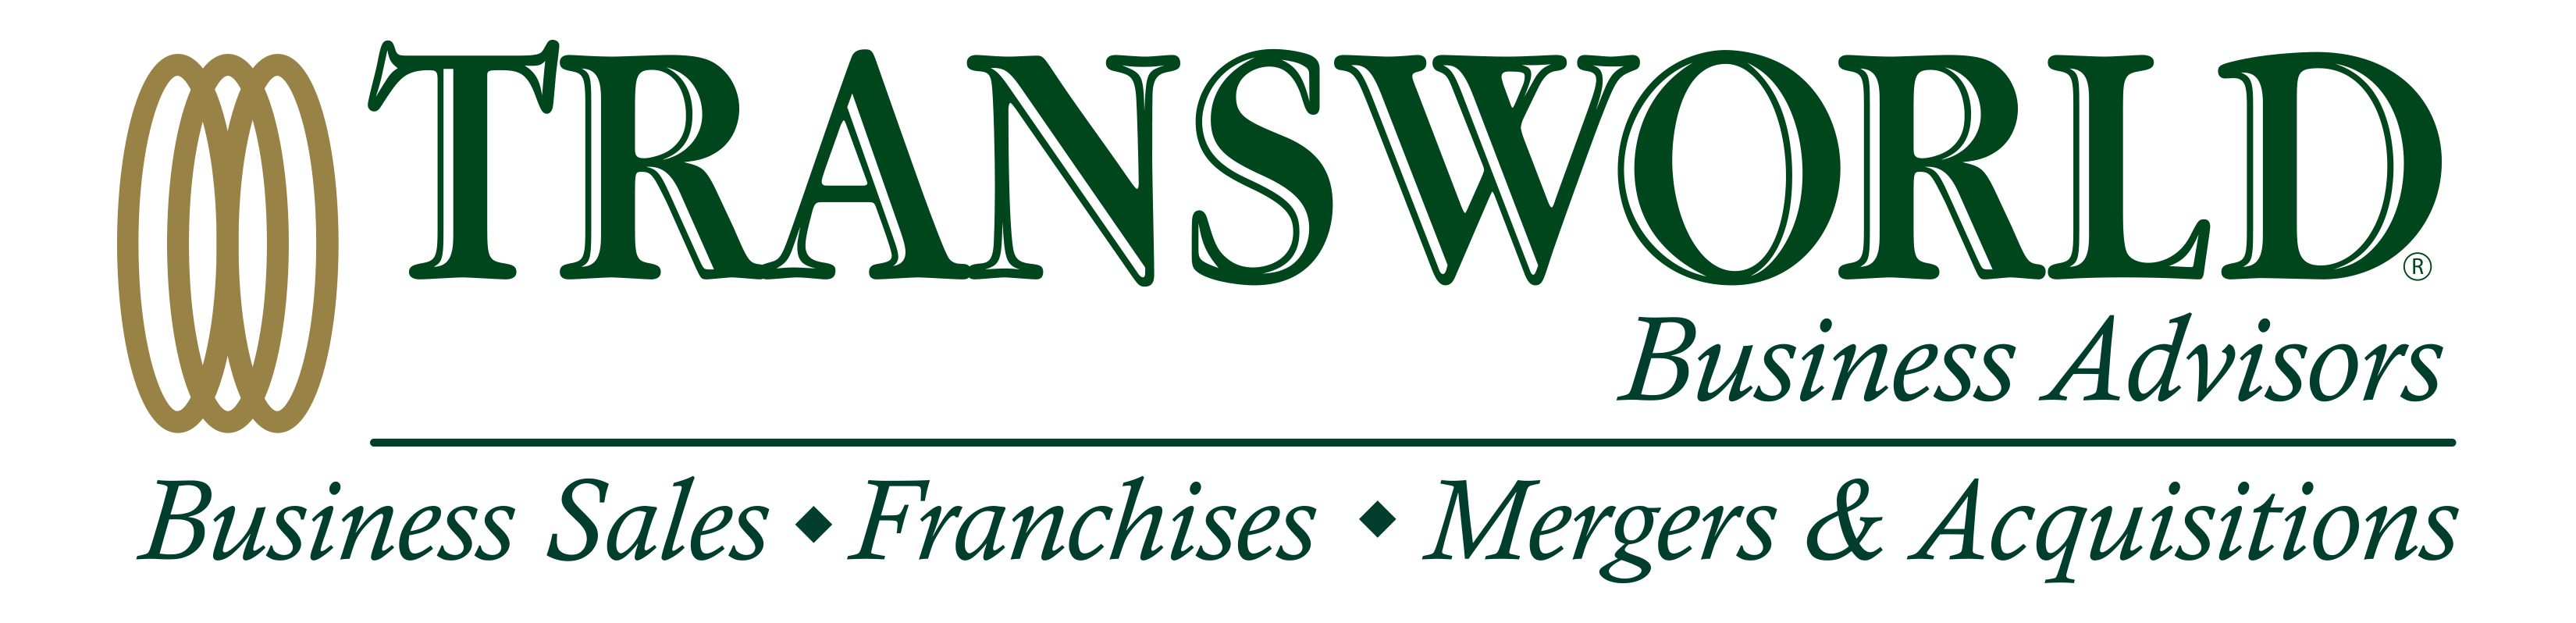 Transworld Business Advisors St Louis West